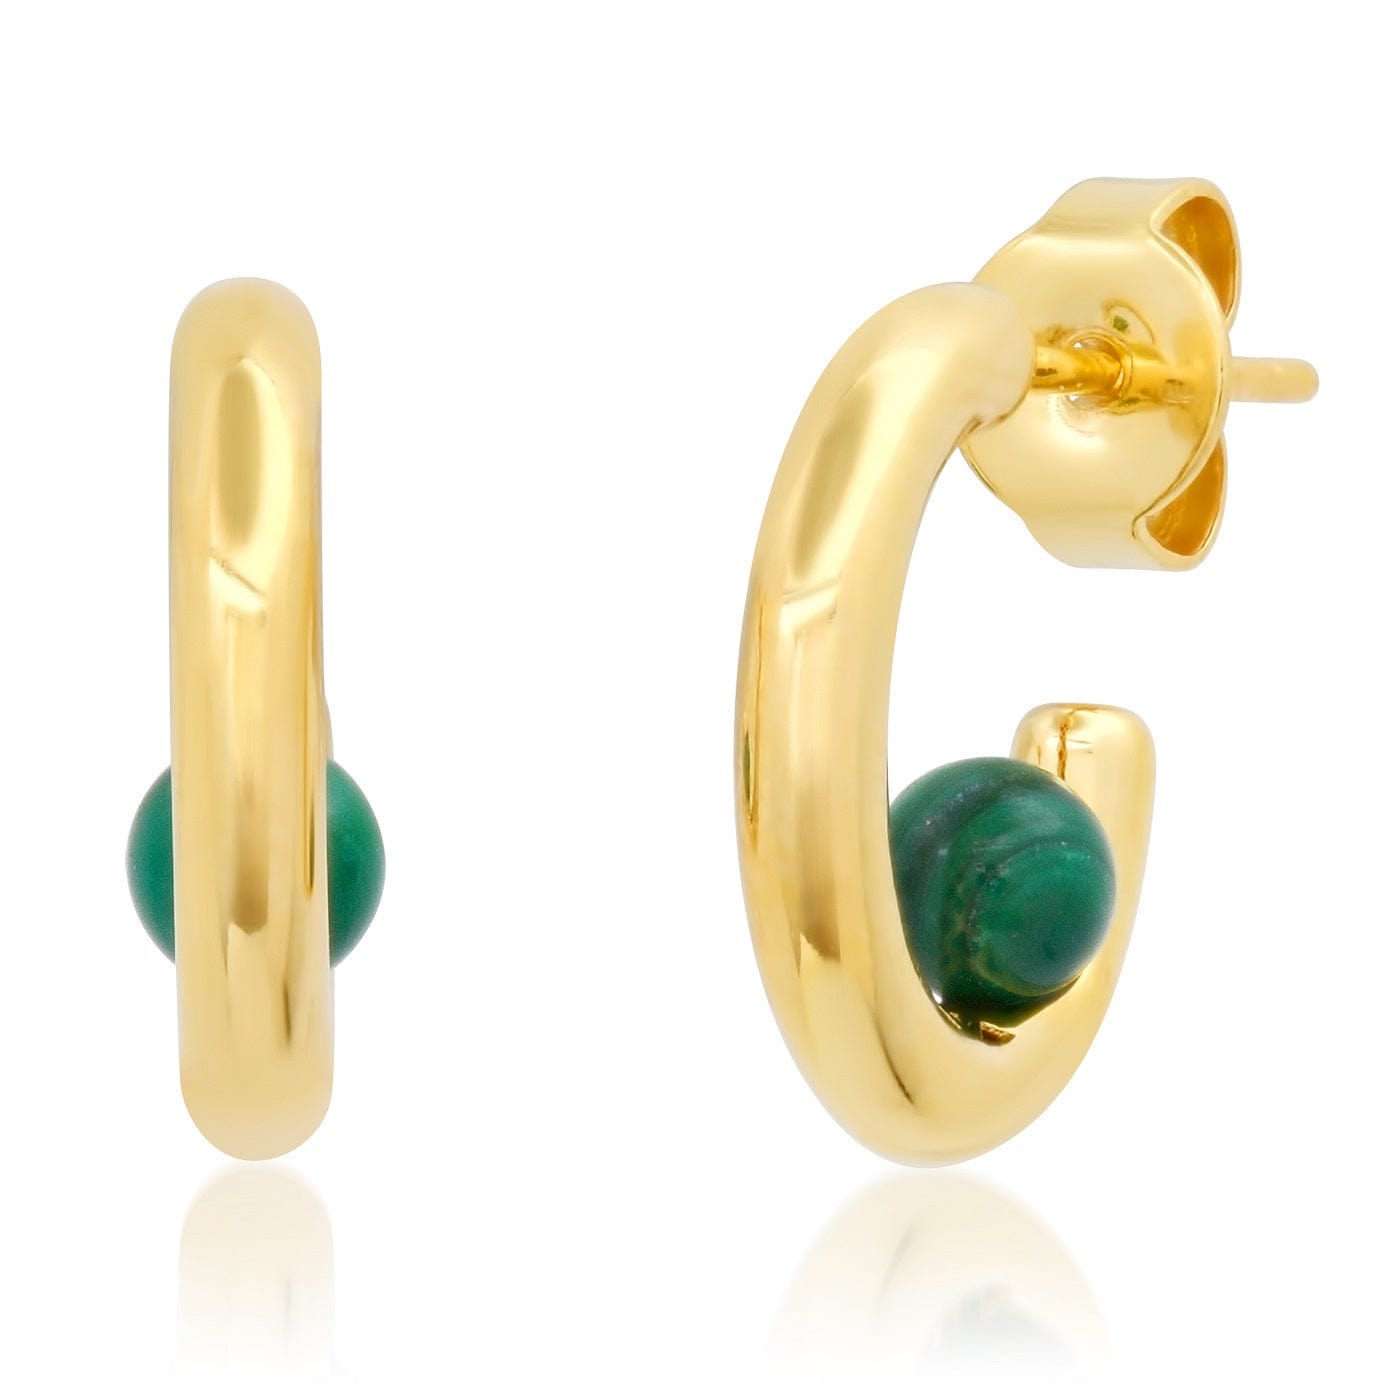 TAI JEWELRY Earrings Malachite Huggie with Gemstone Ball Accent